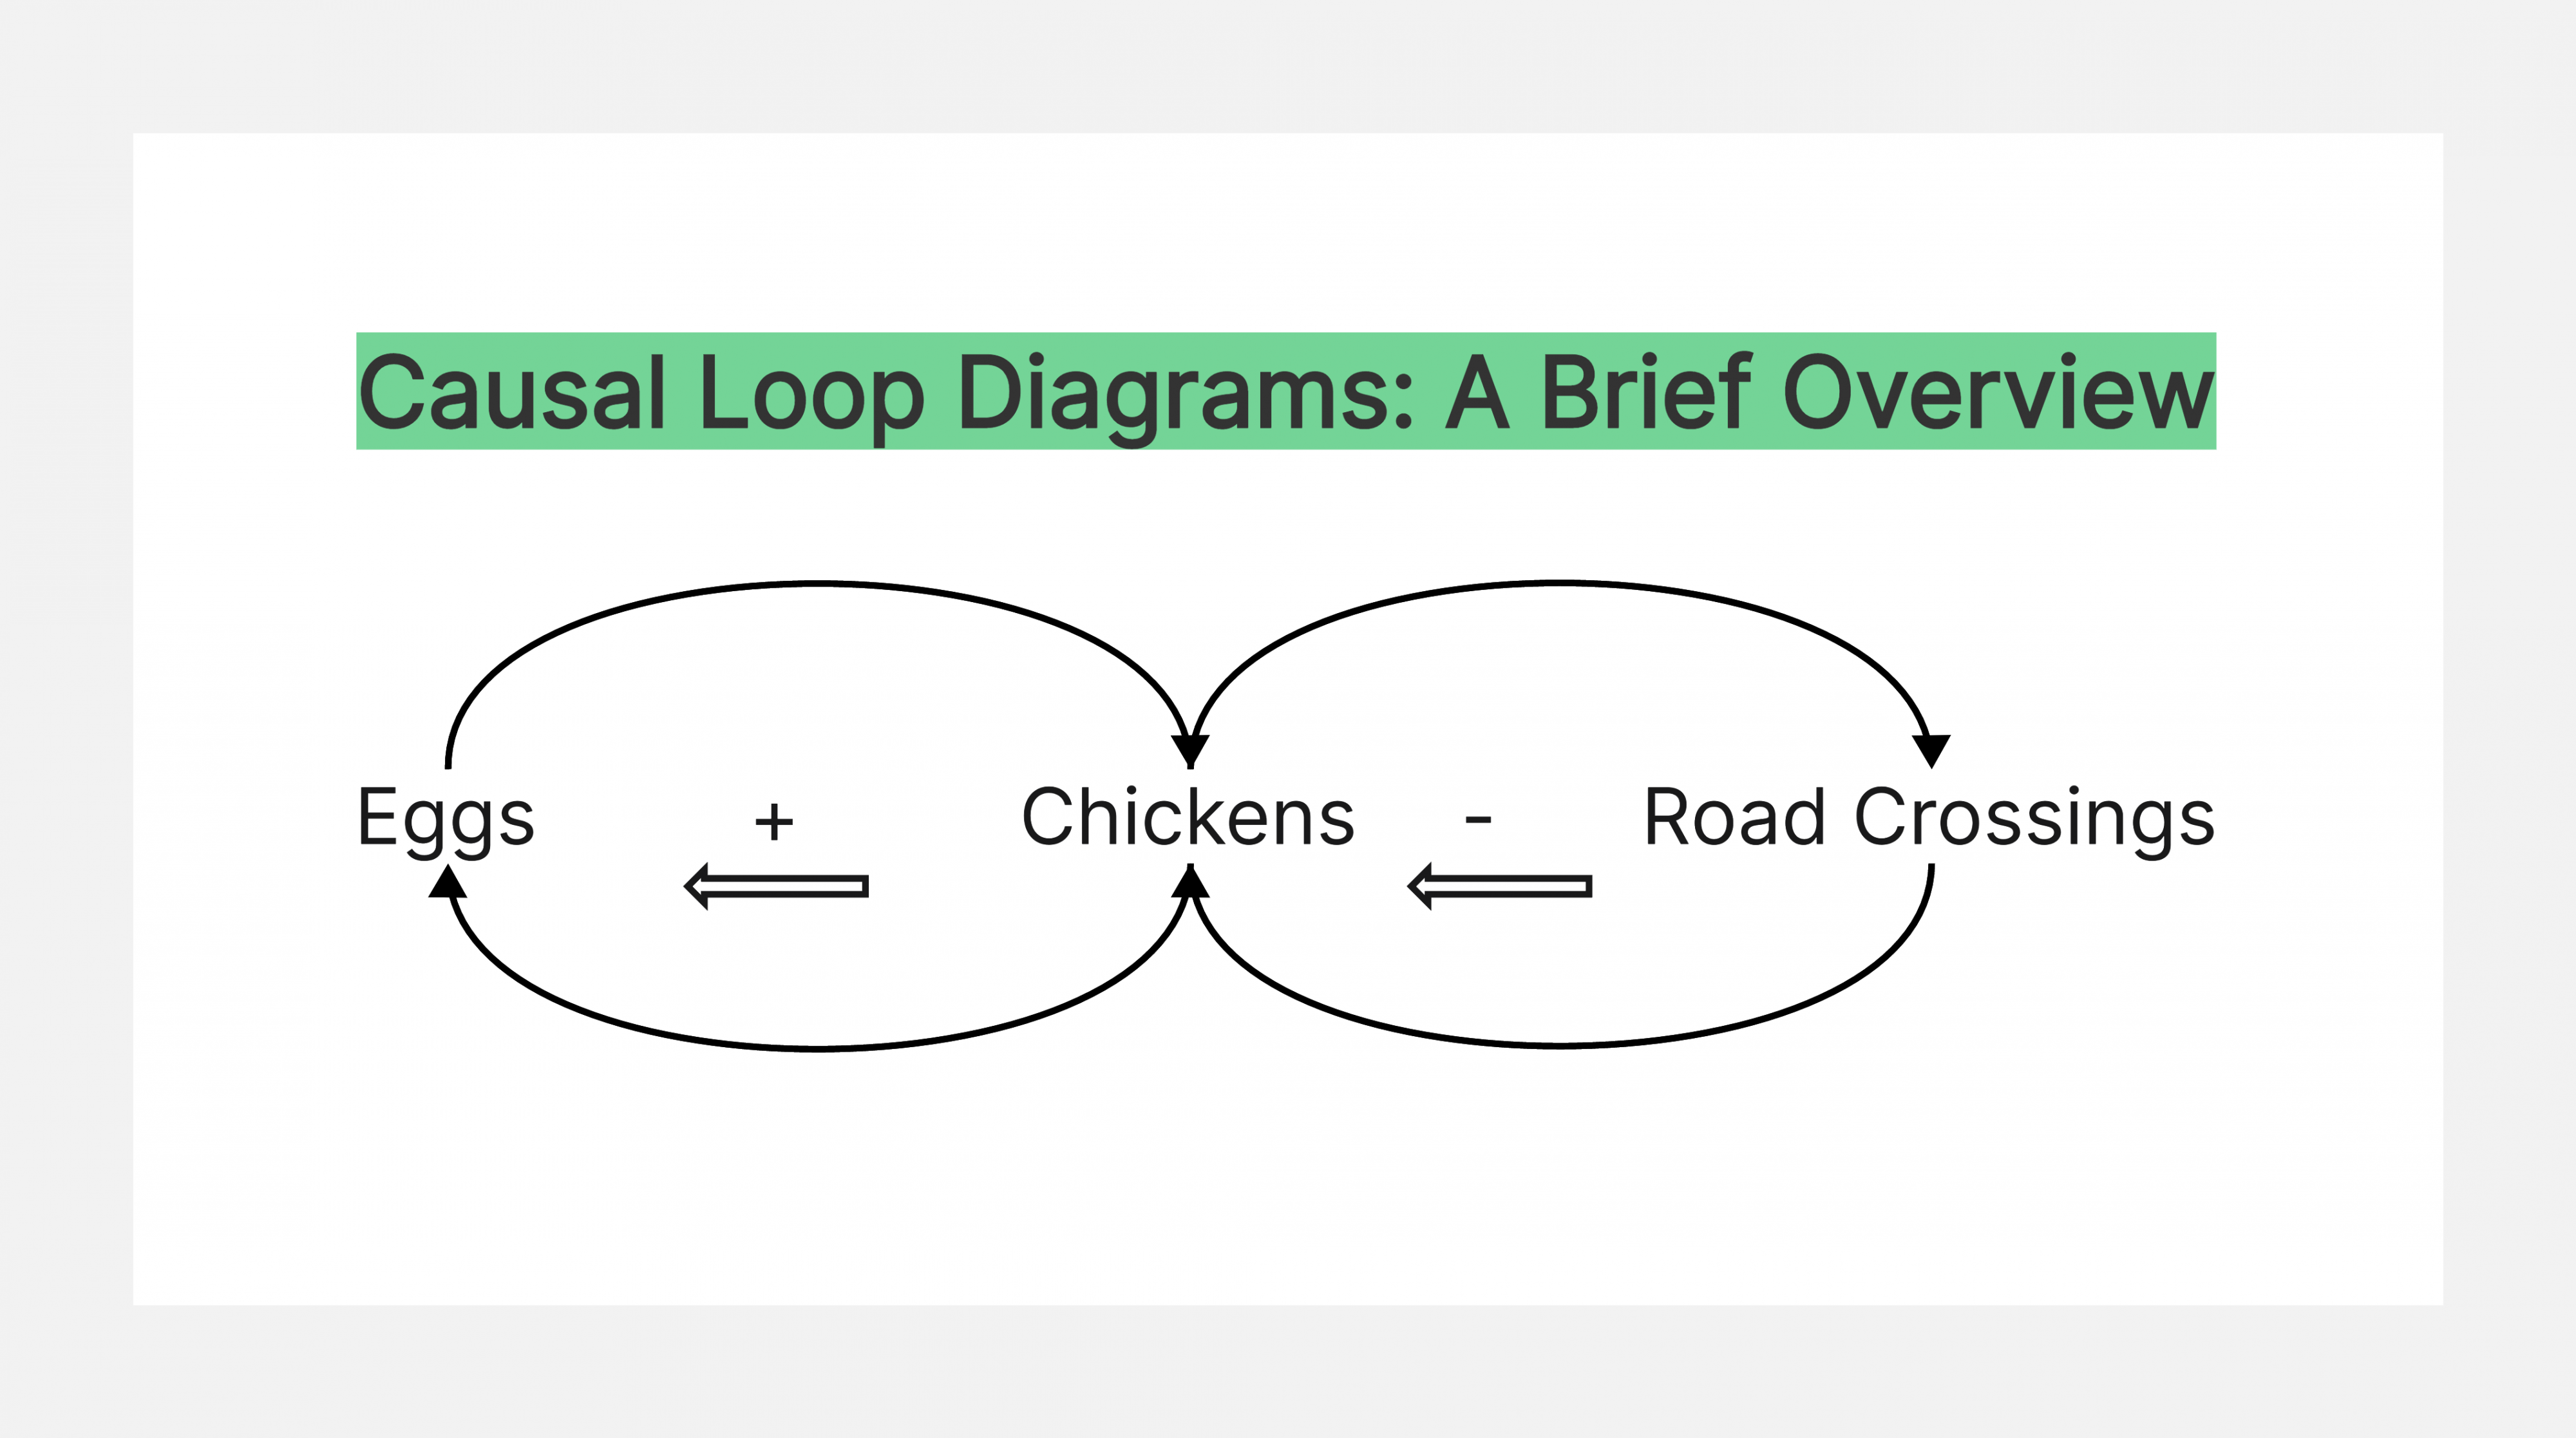 Causal Loop Diagrams: A Brief Overview